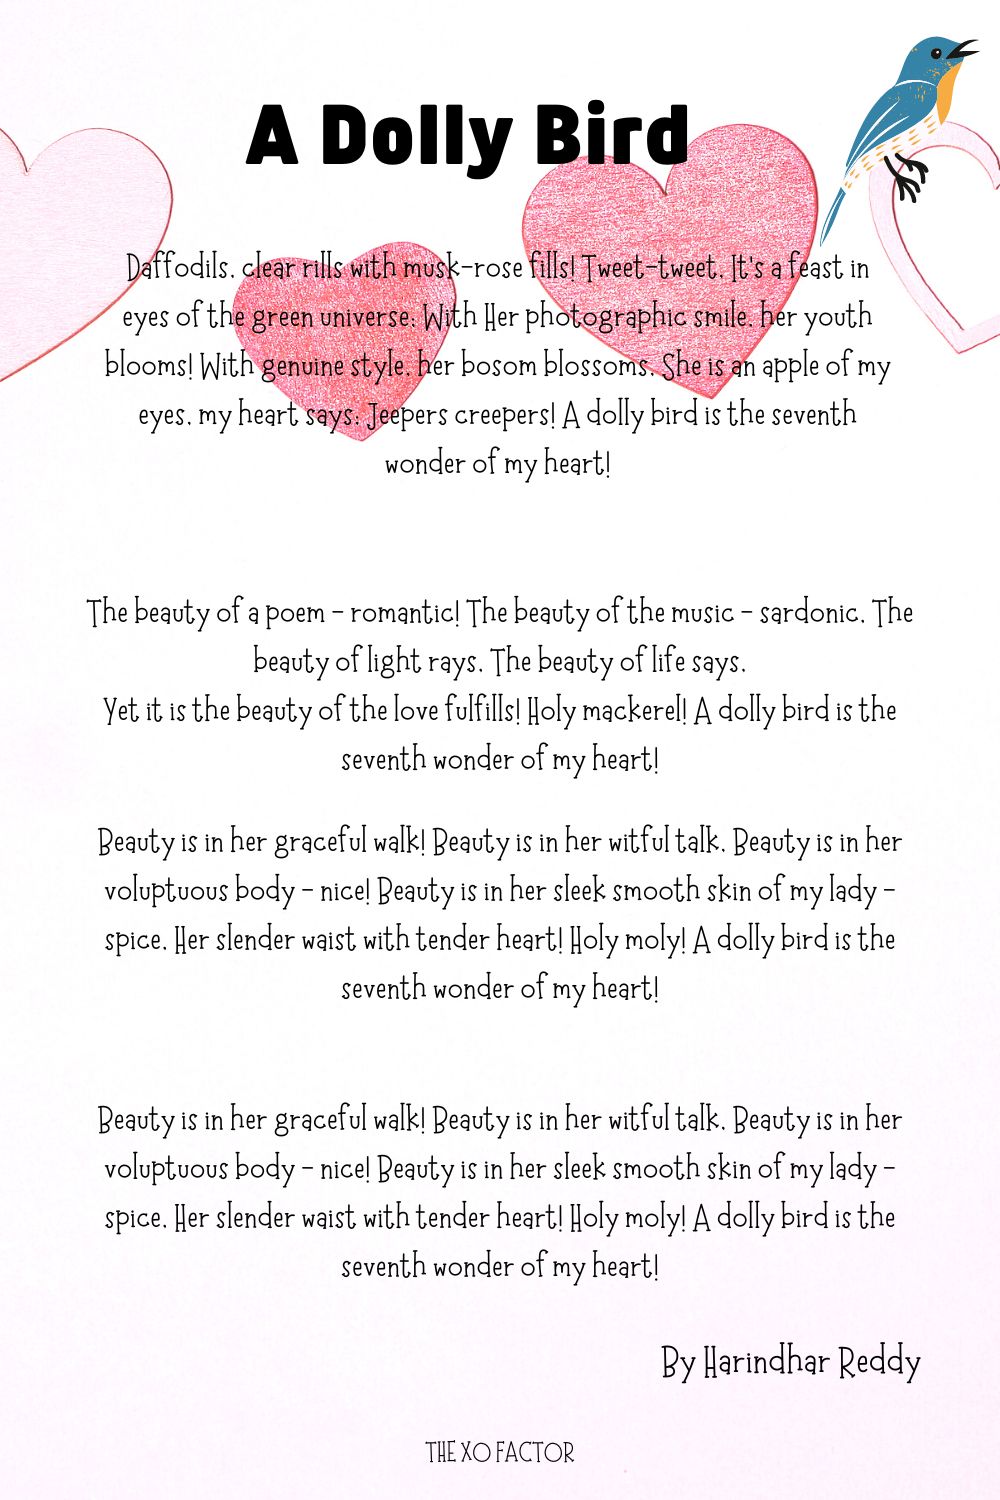 A Dolly Bird (A Love Poem) by Harindhar Reddy